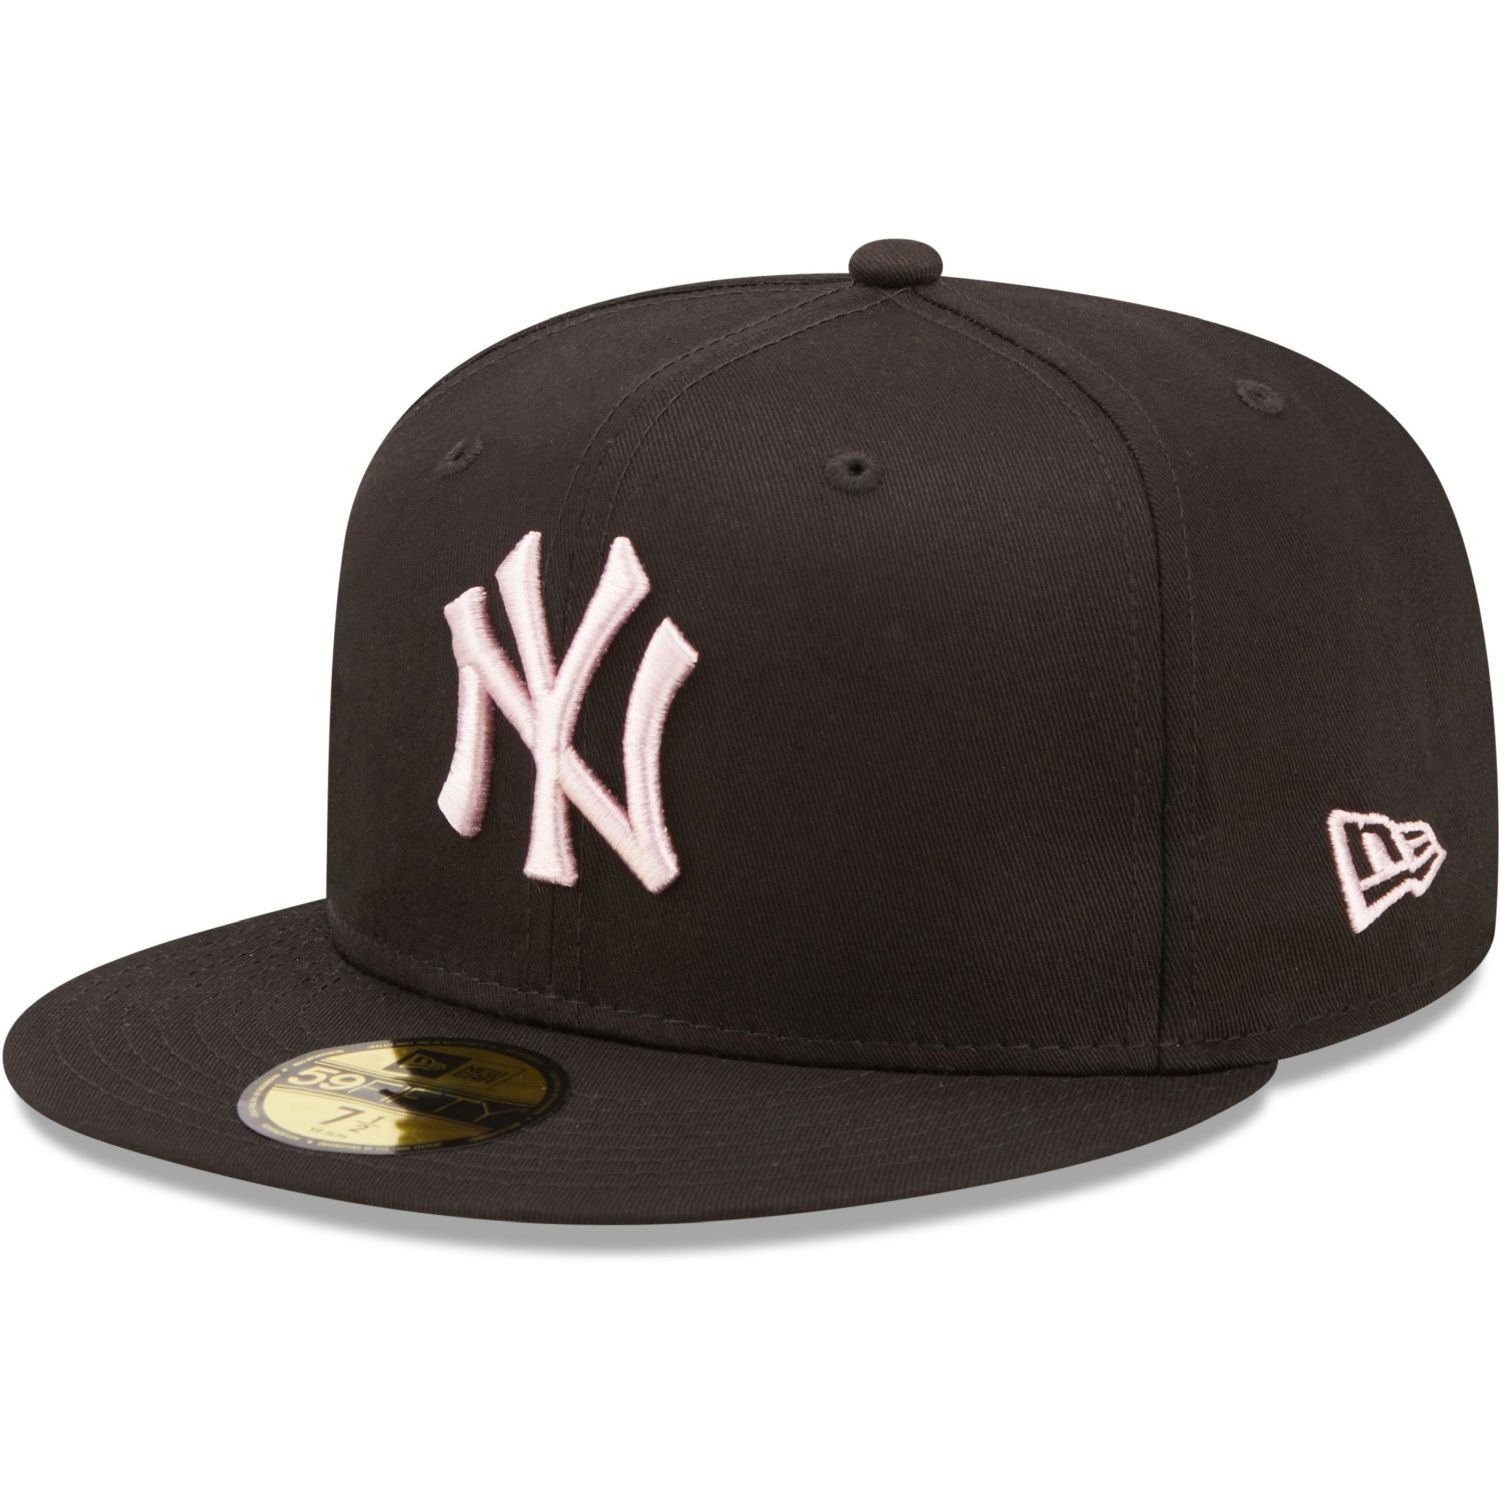 New Era Fitted Cap 59Fifty New York Yankees schwarz